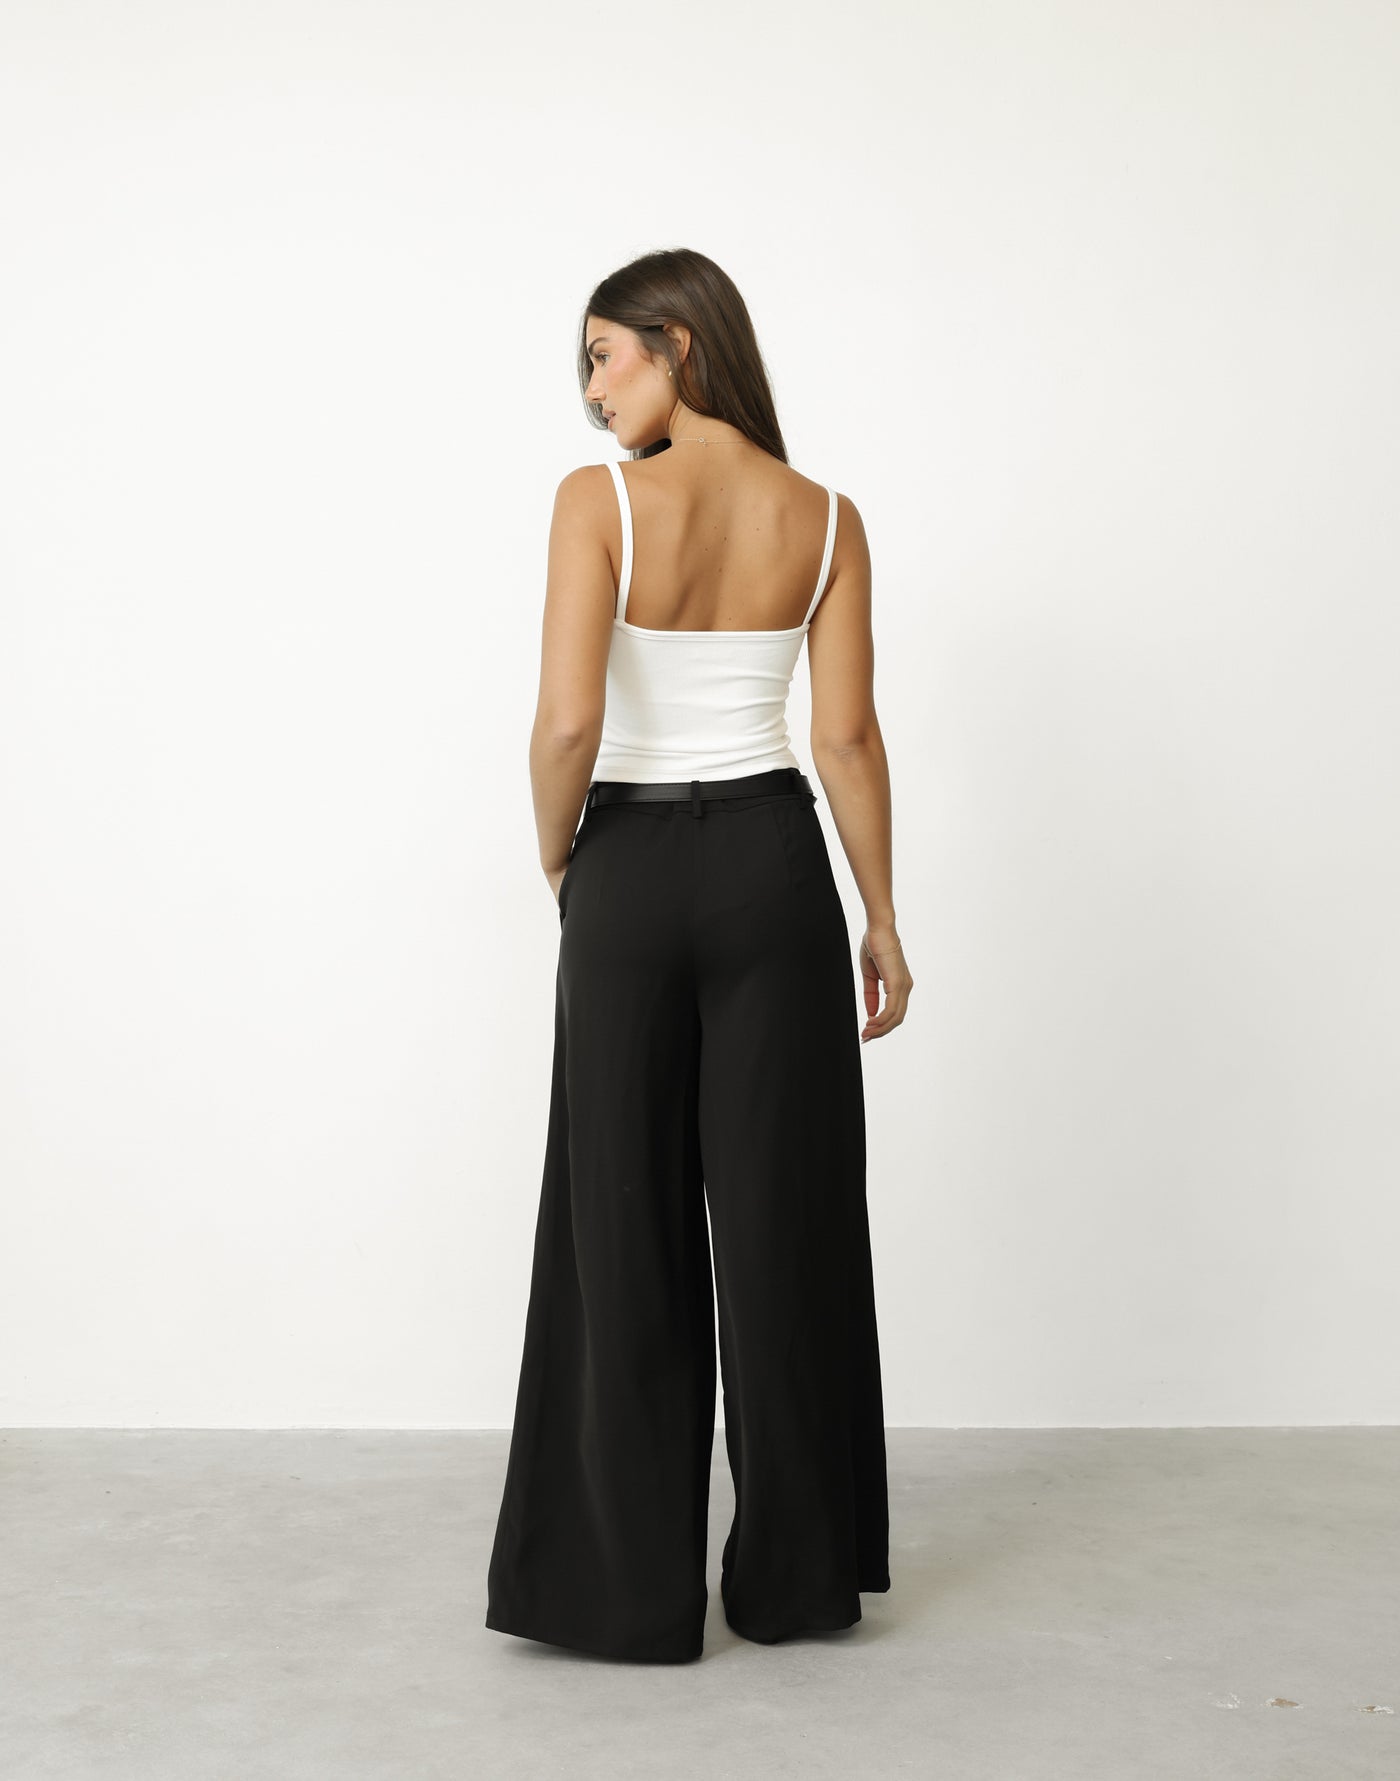 Phoenix Pants (Black) | Charcoal Clothing Exclusive - - Women's Pants - Charcoal Clothing